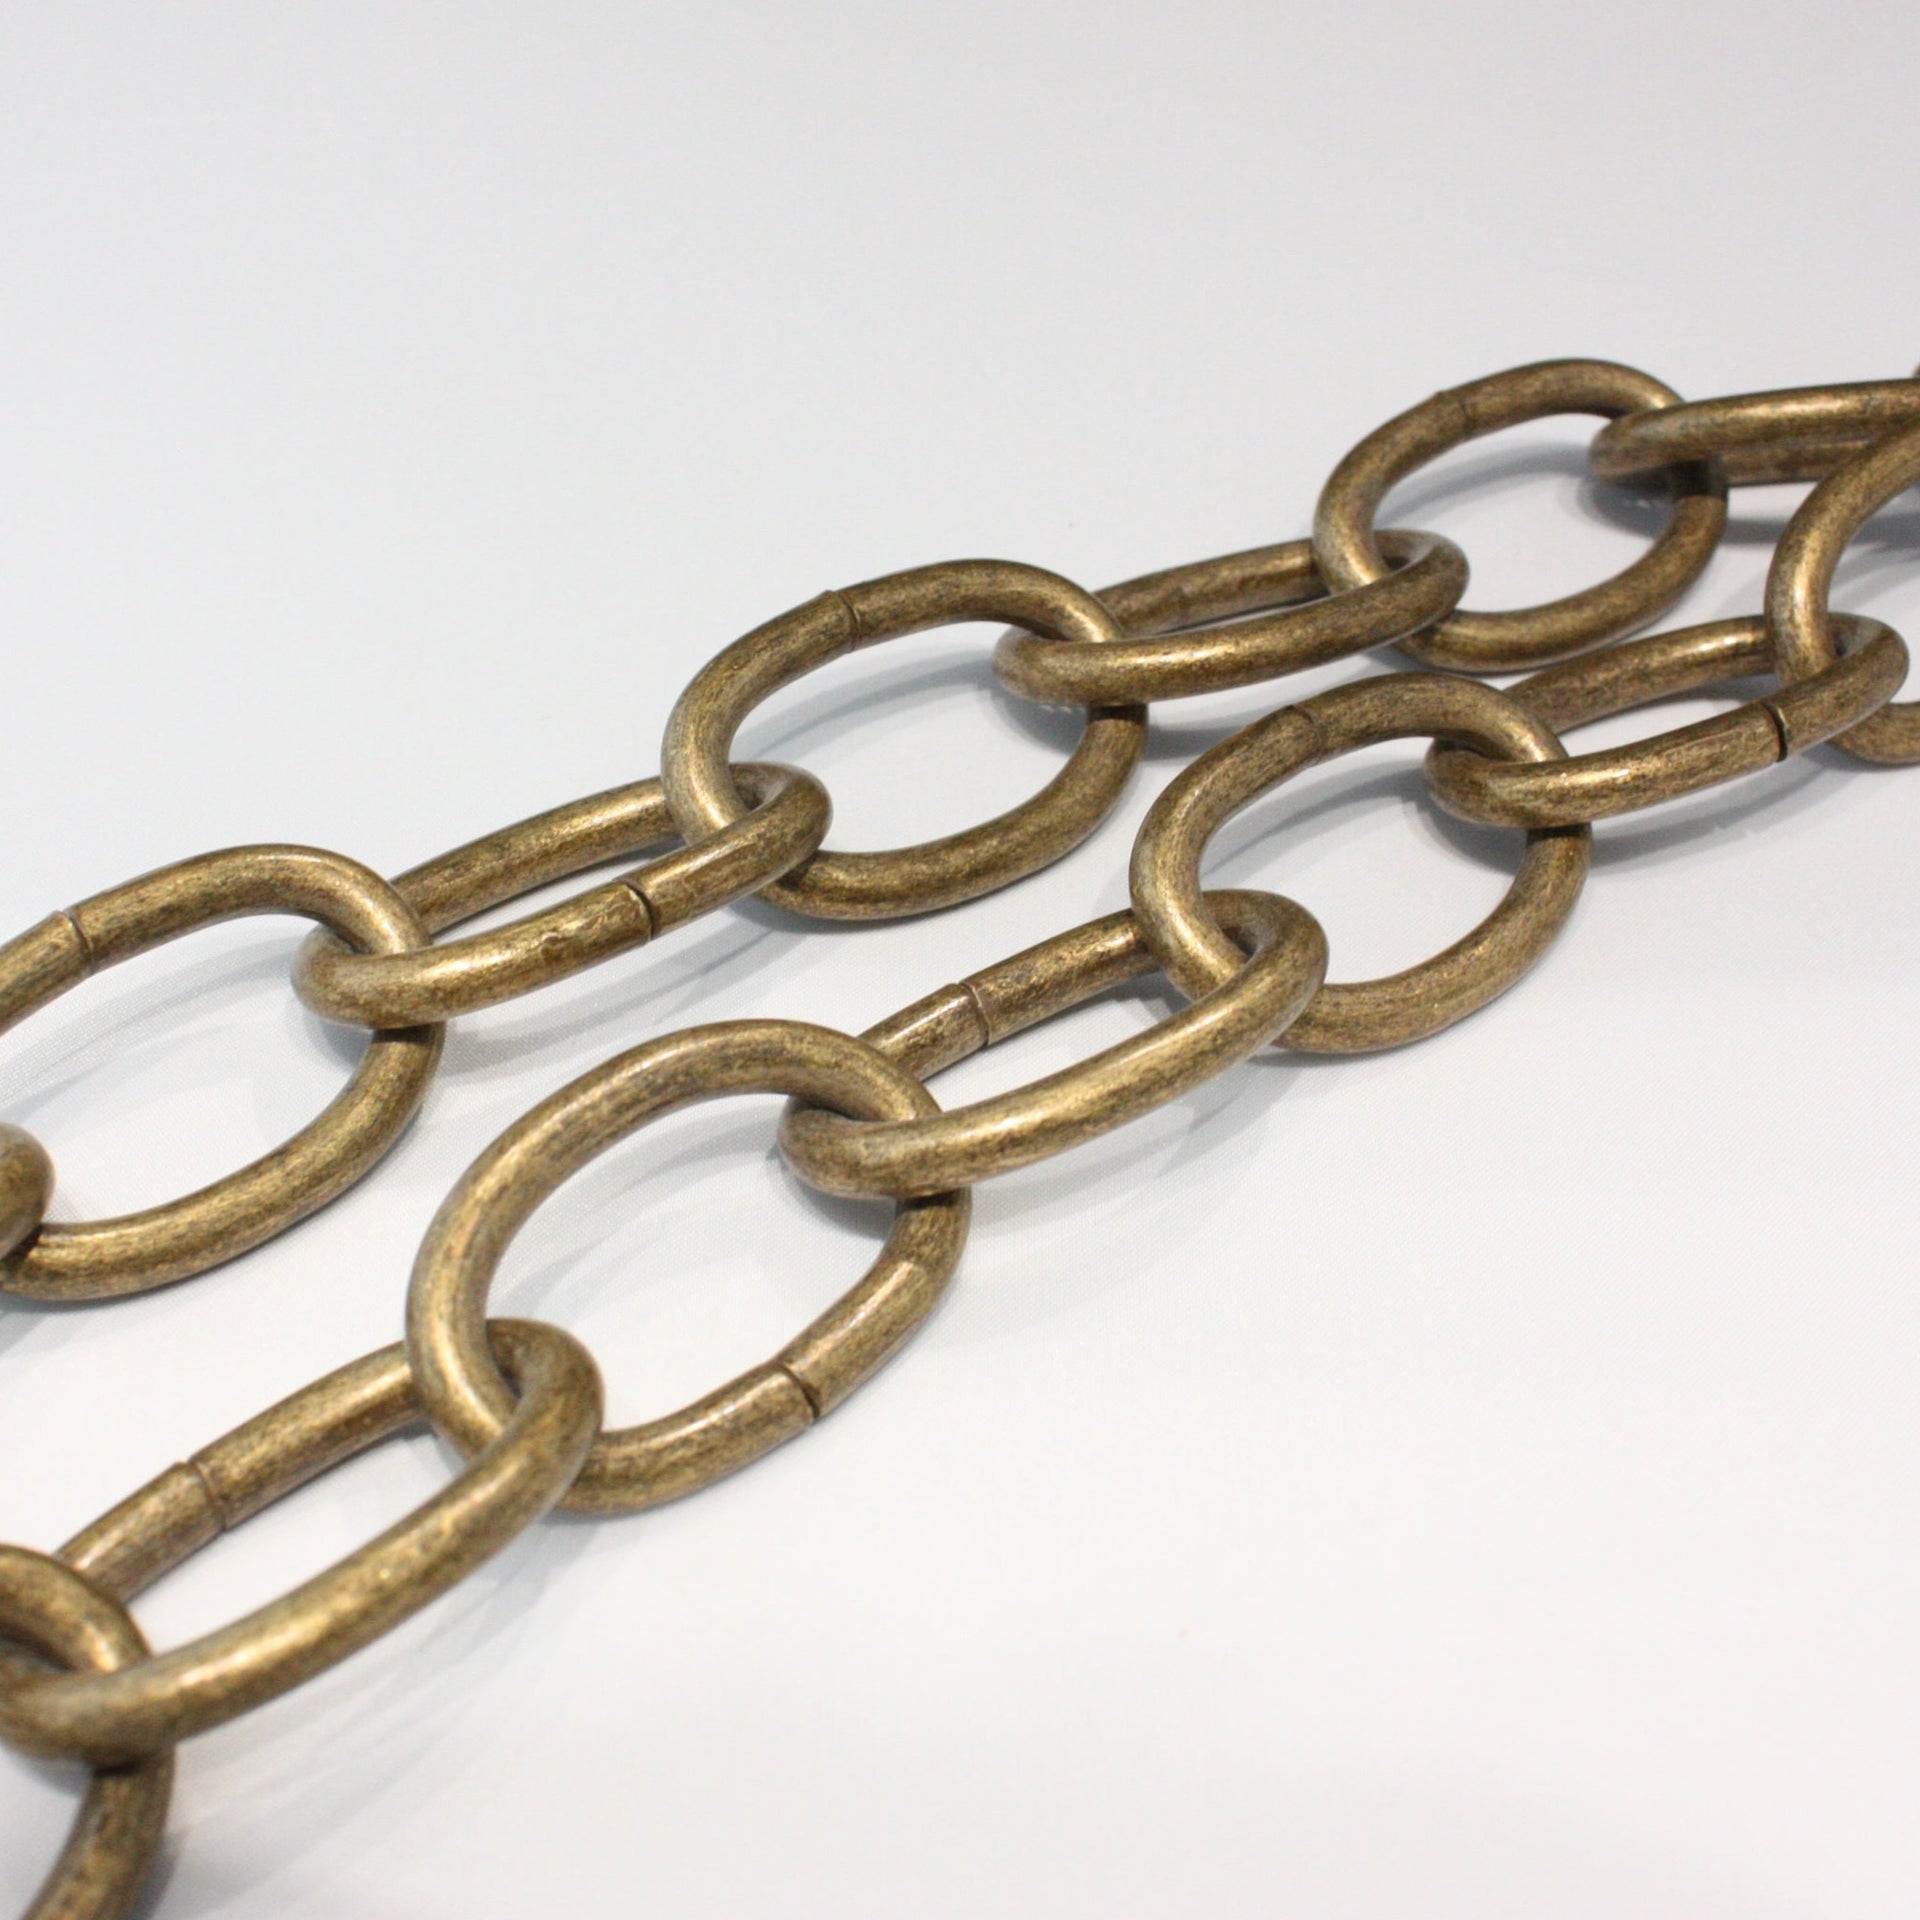 Antique Brass Chain (3 feet)